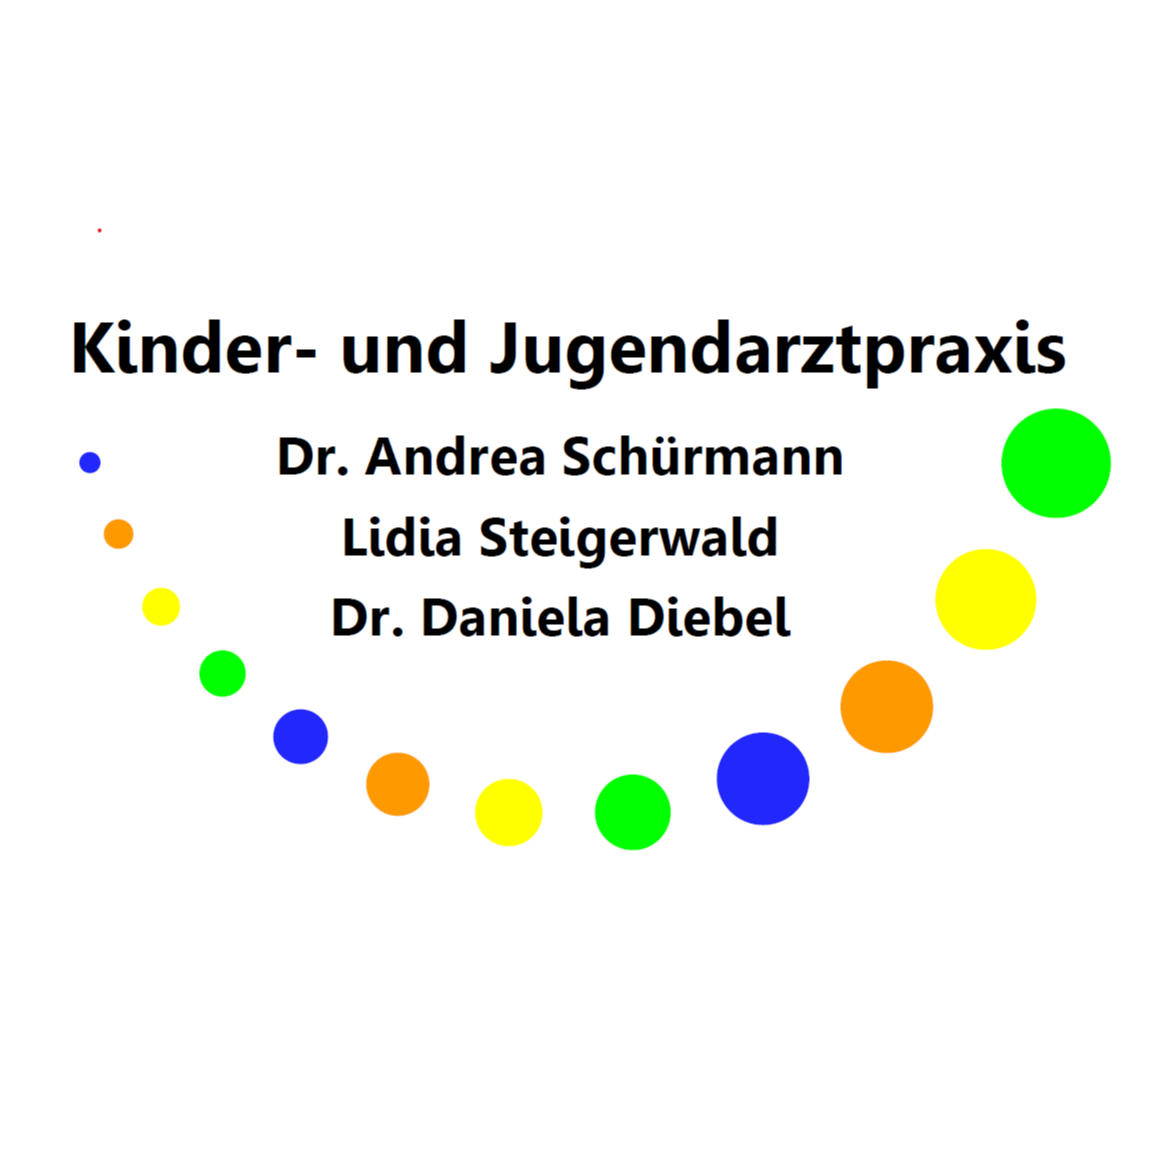 Kinder- und Jugendpraxis Dr. Andrea Schürmann, Lidia Steigerwald, Dr. Daniela Diebel